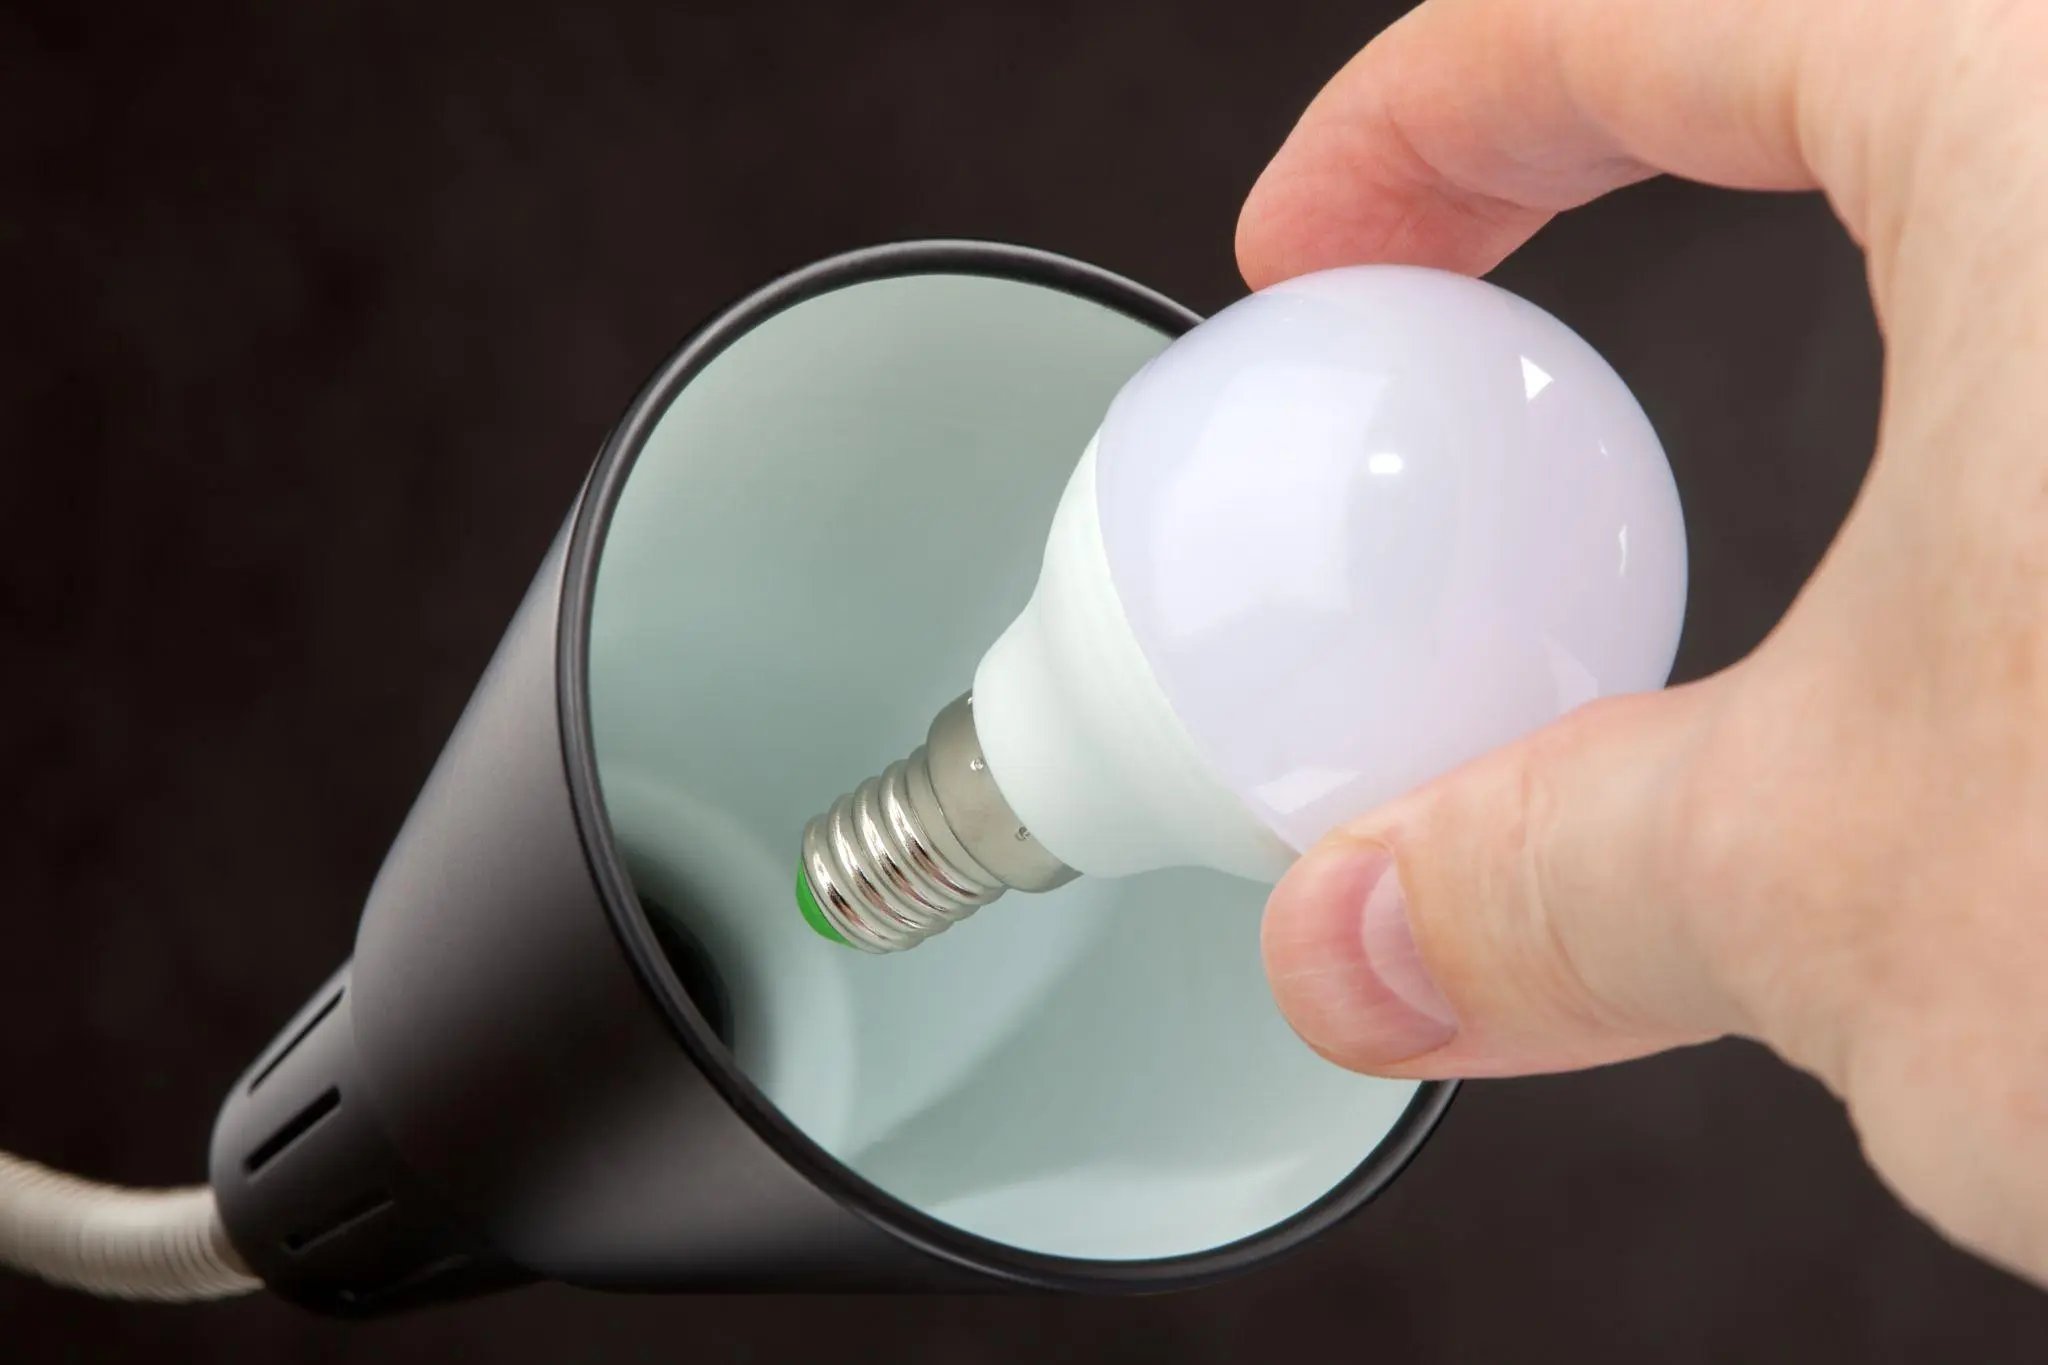 replacement of light bulbs in floor lamp